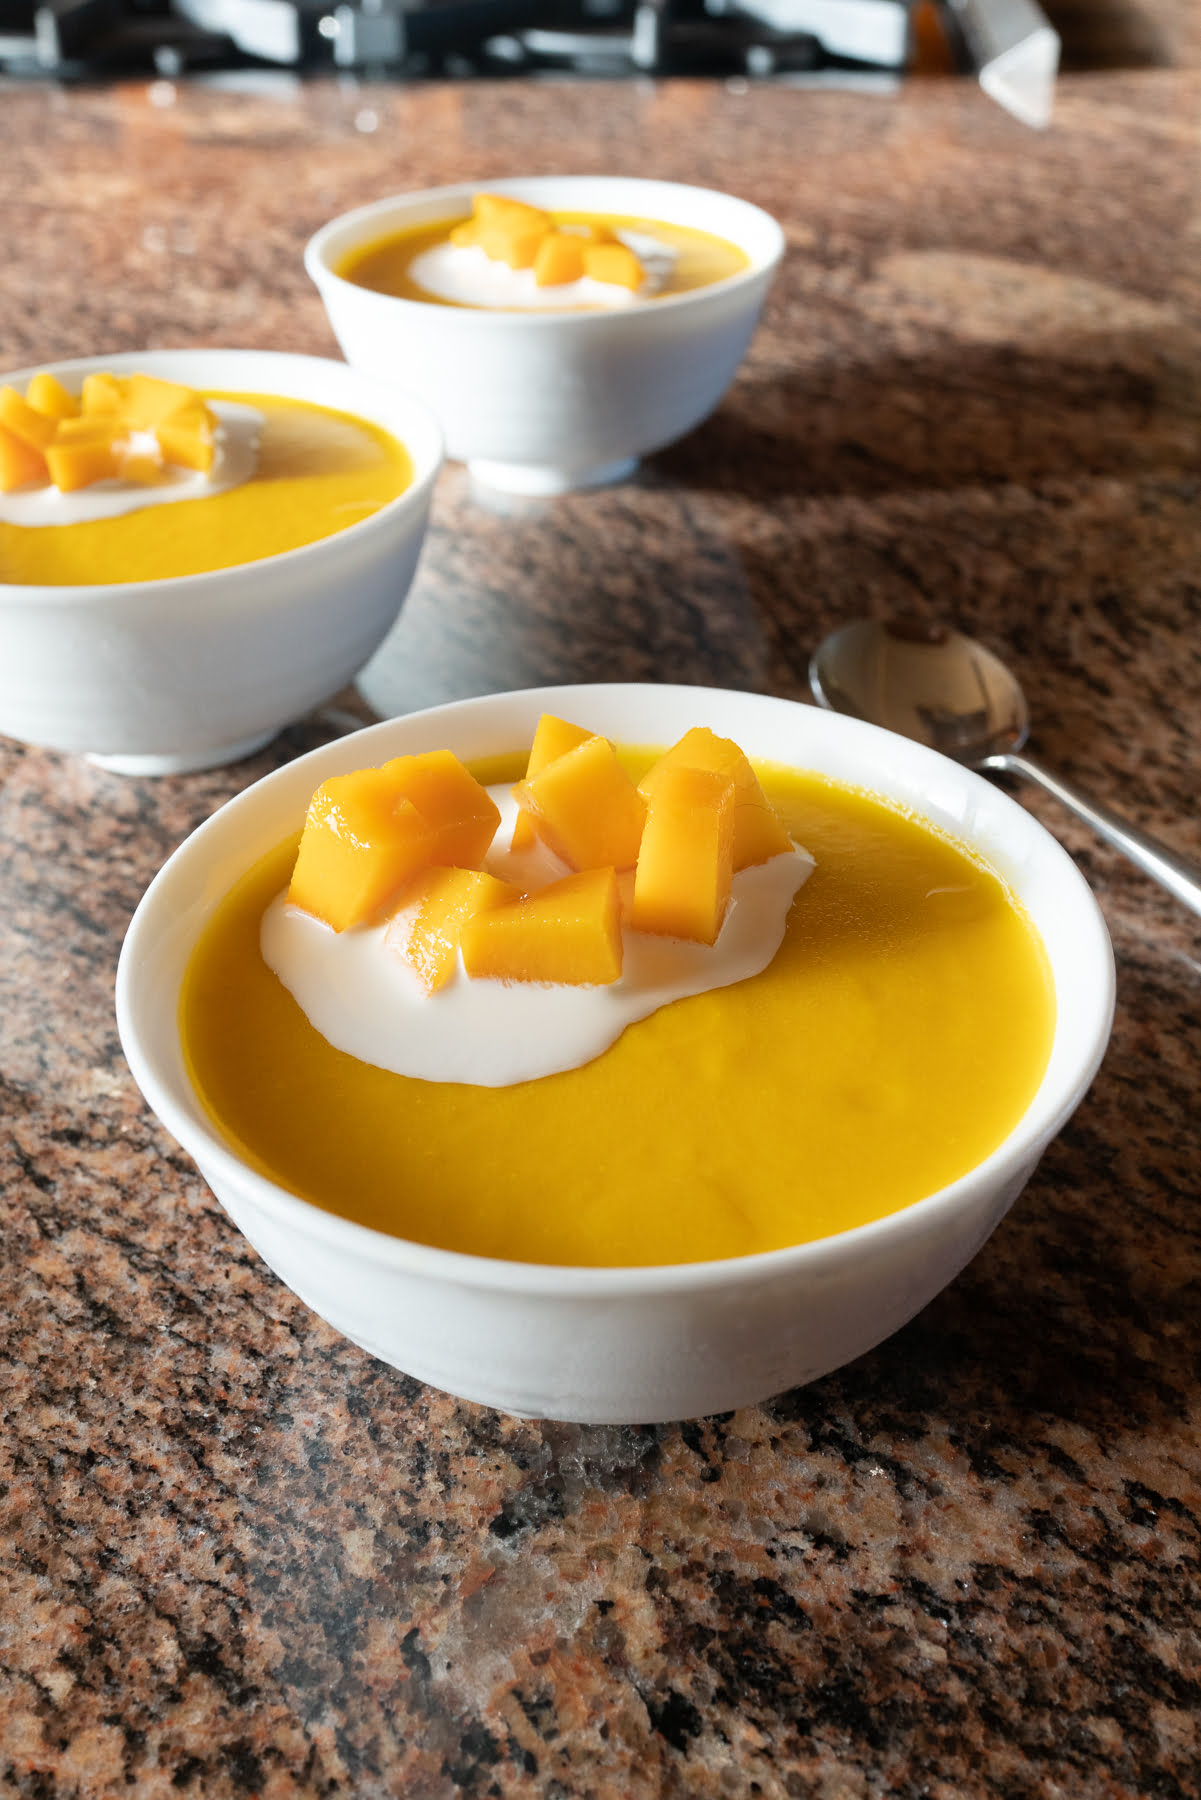 Bowls of mango pudding, ready to eat.